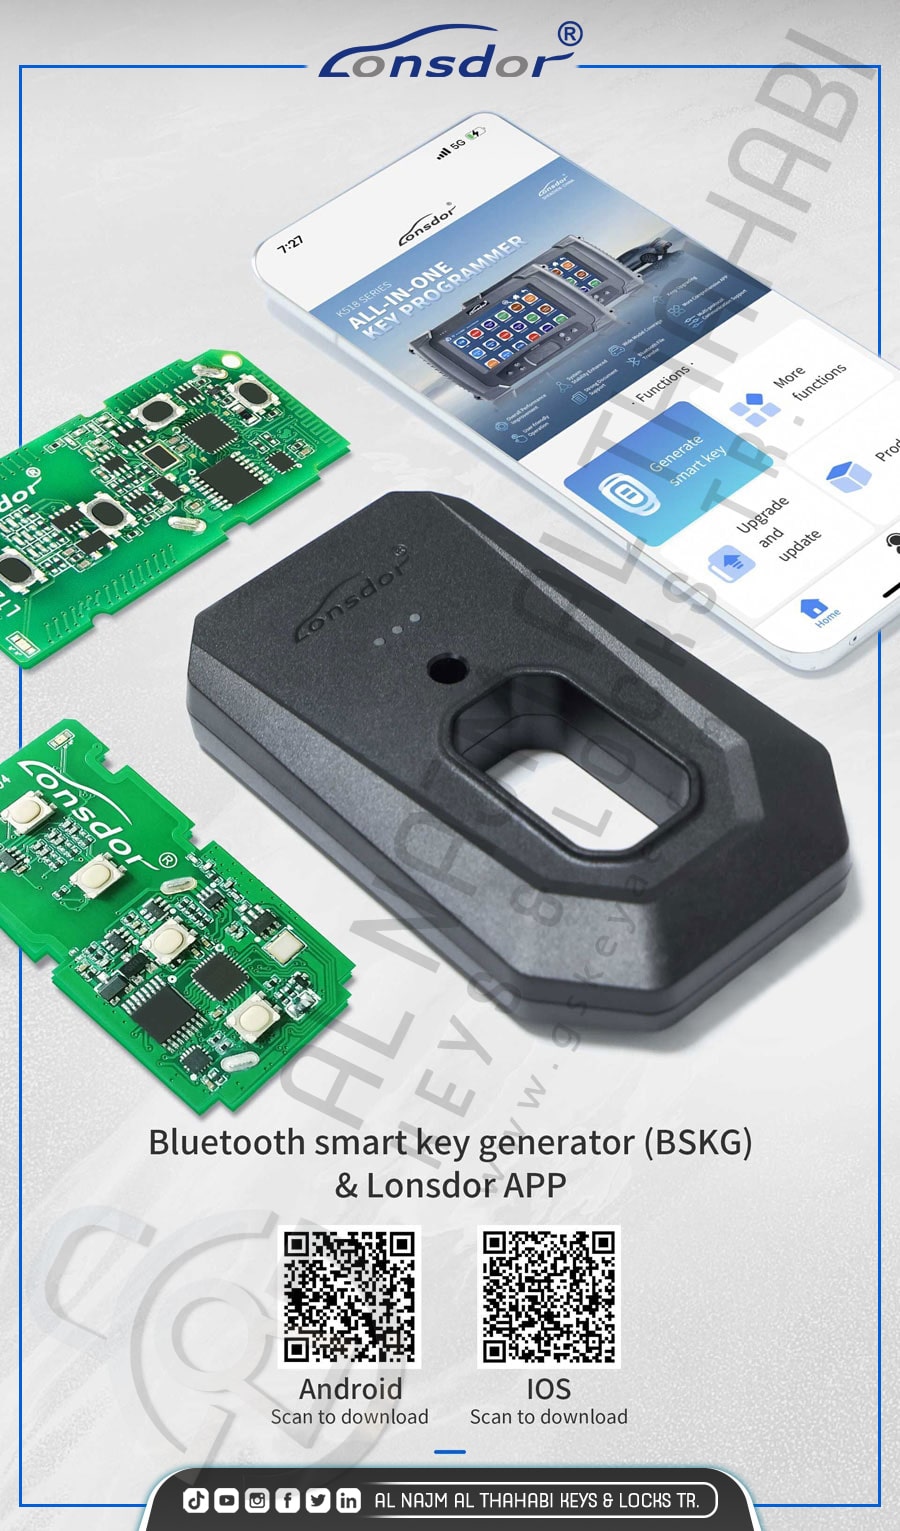 Lonsdor Bluetooth Smart Key Generator BSKG App